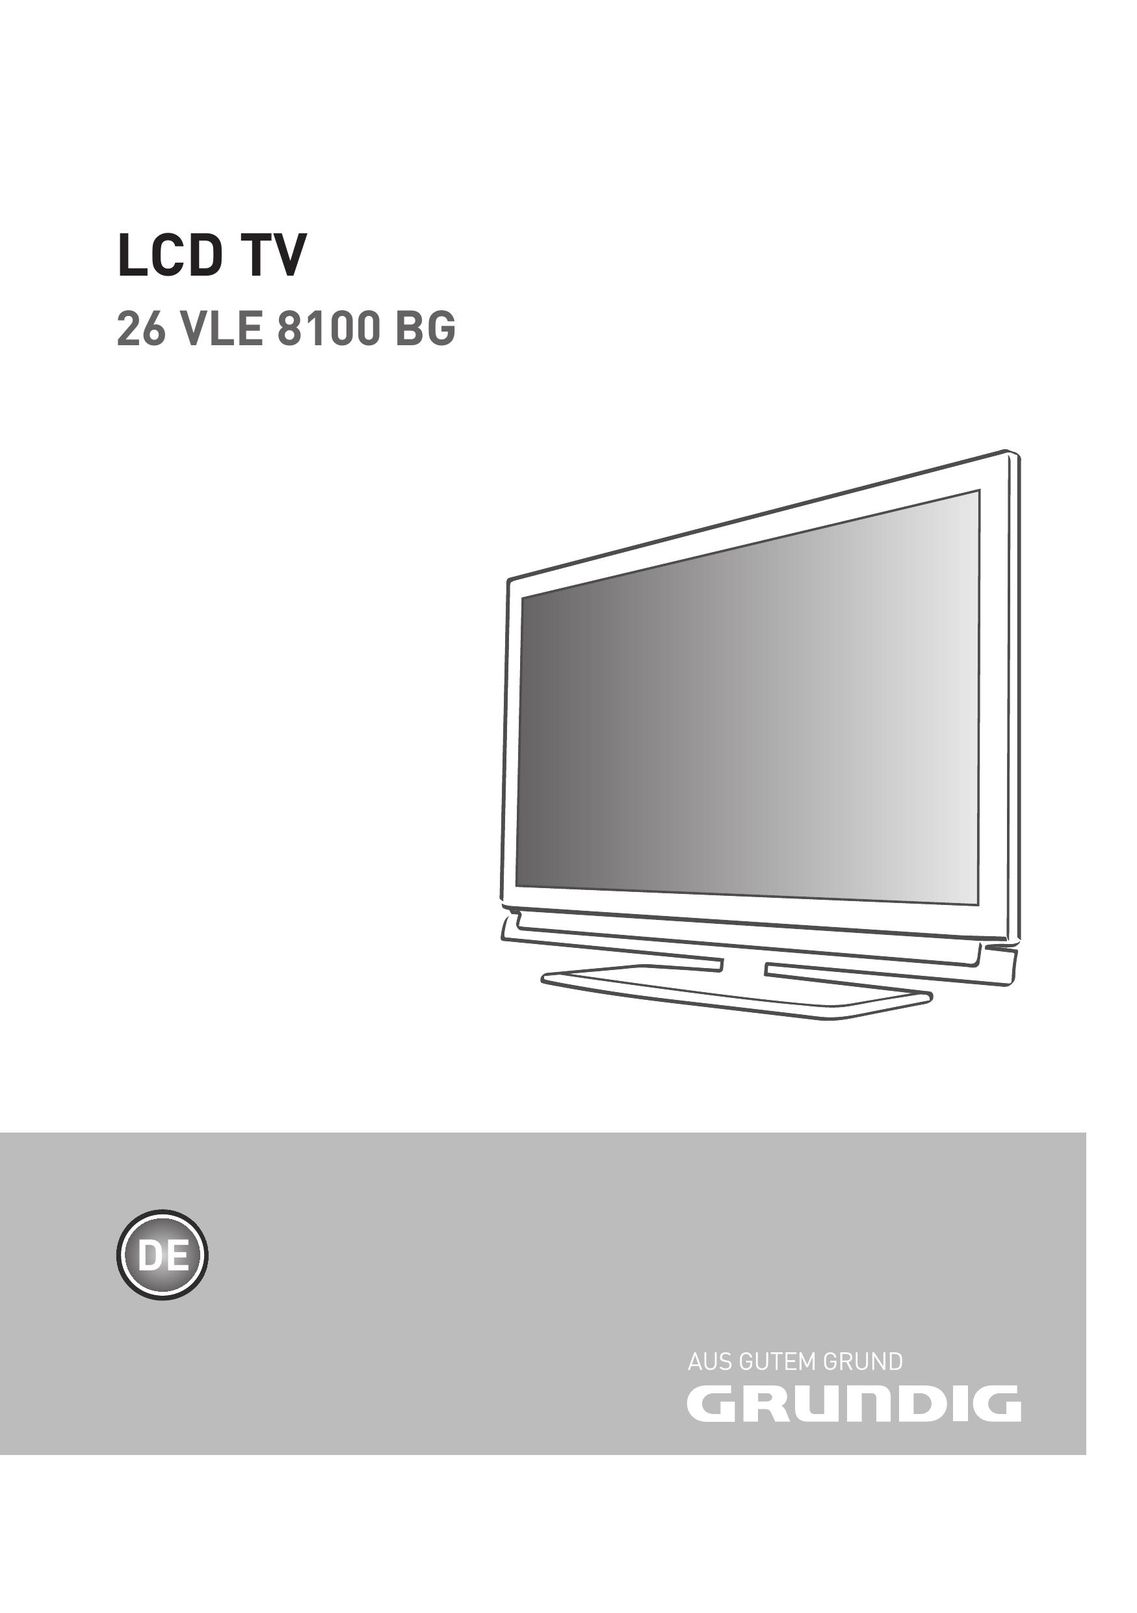 Grundig 26 VLE 8100 BG Flat Panel Television User Manual